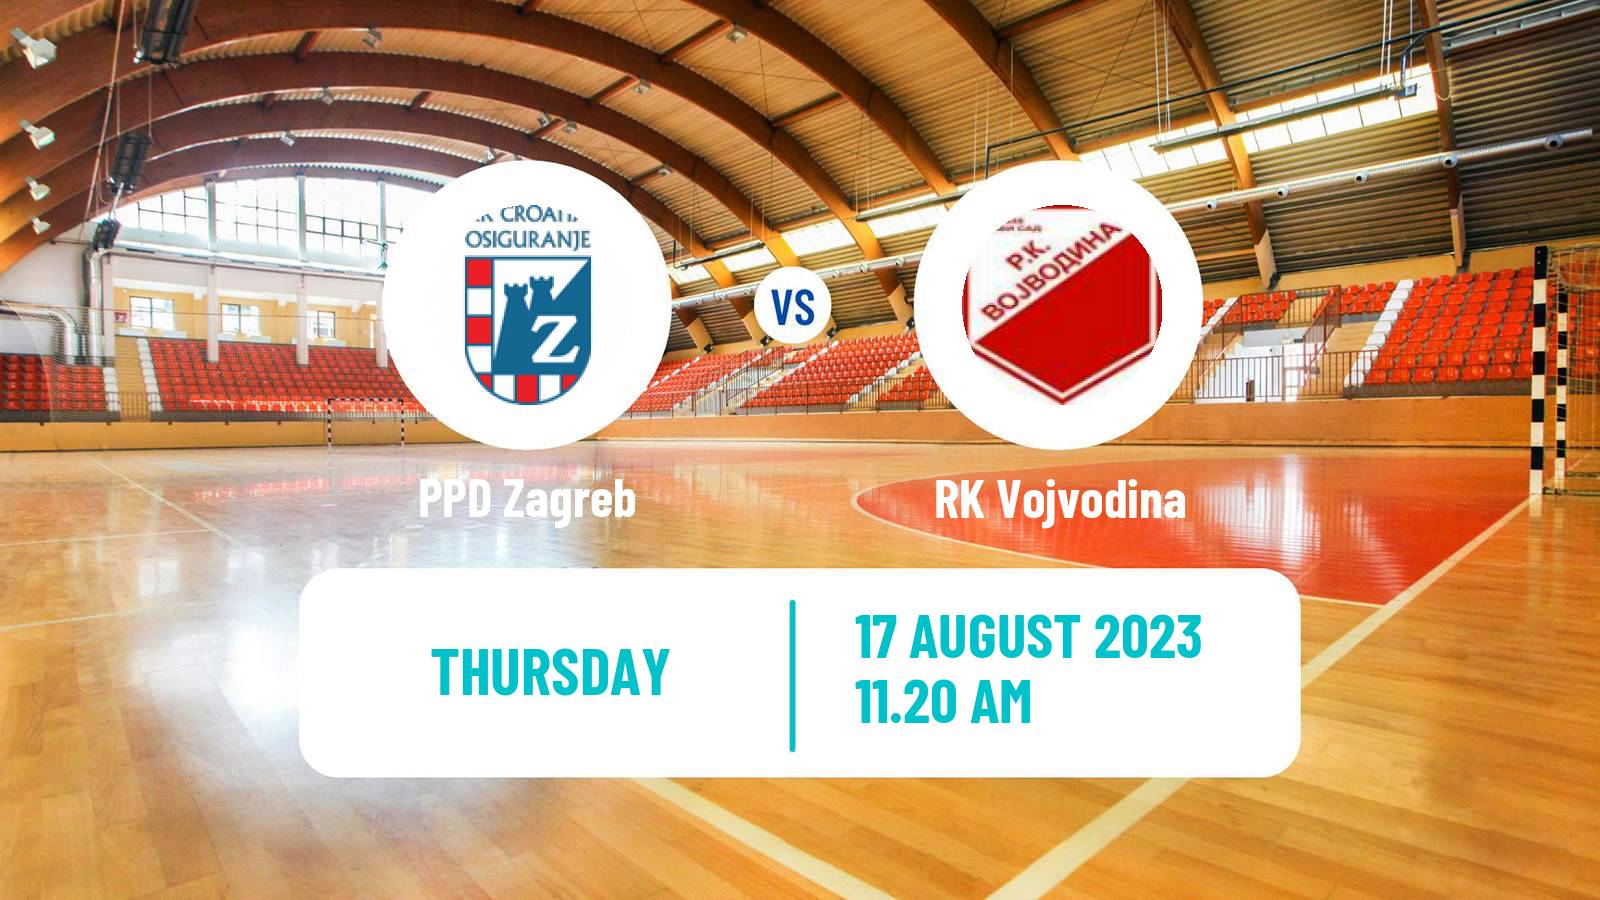 Handball Club Friendly Hanbdall PPD Zagreb - RK Vojvodina